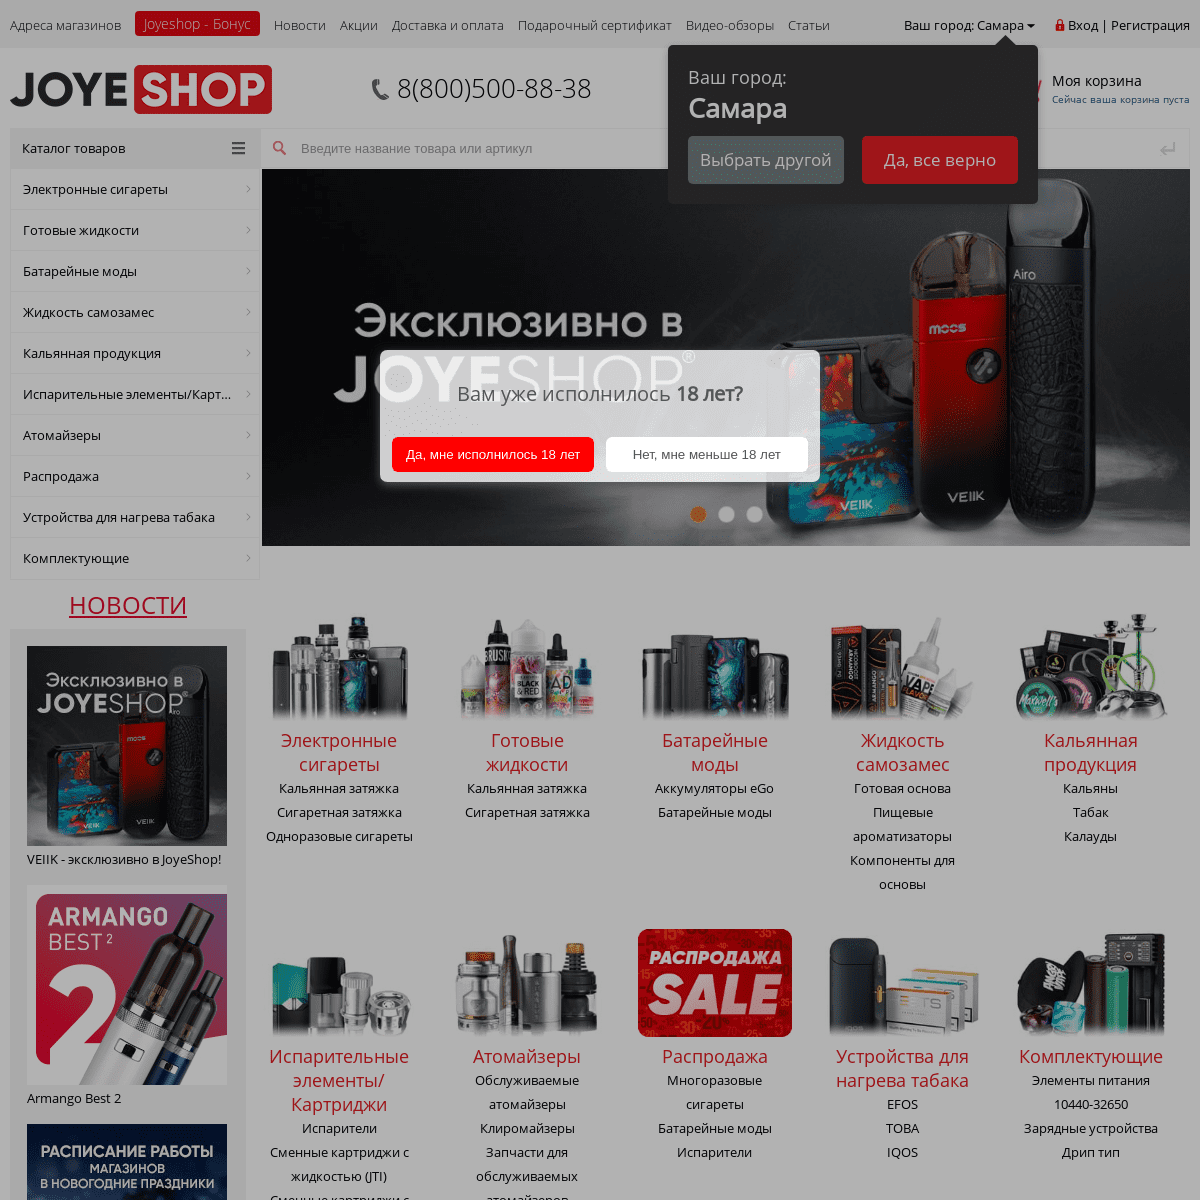 A complete backup of joyeshop.ru